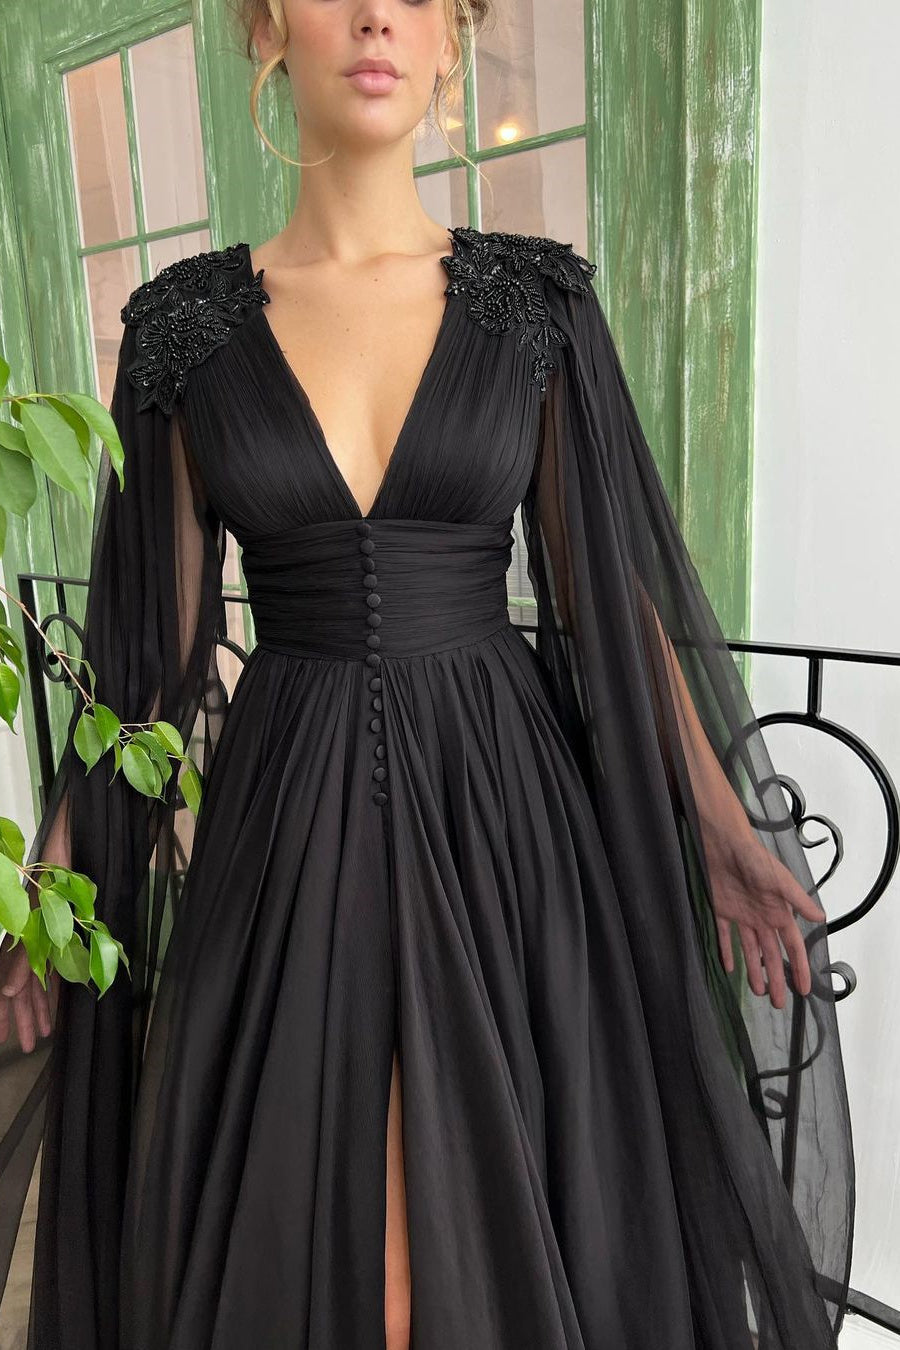 Elegant Black Tulle Evening Dress with Deep V Neck, Front Slit, and Ruffle Sleeves-Evening Dresses-BallBride